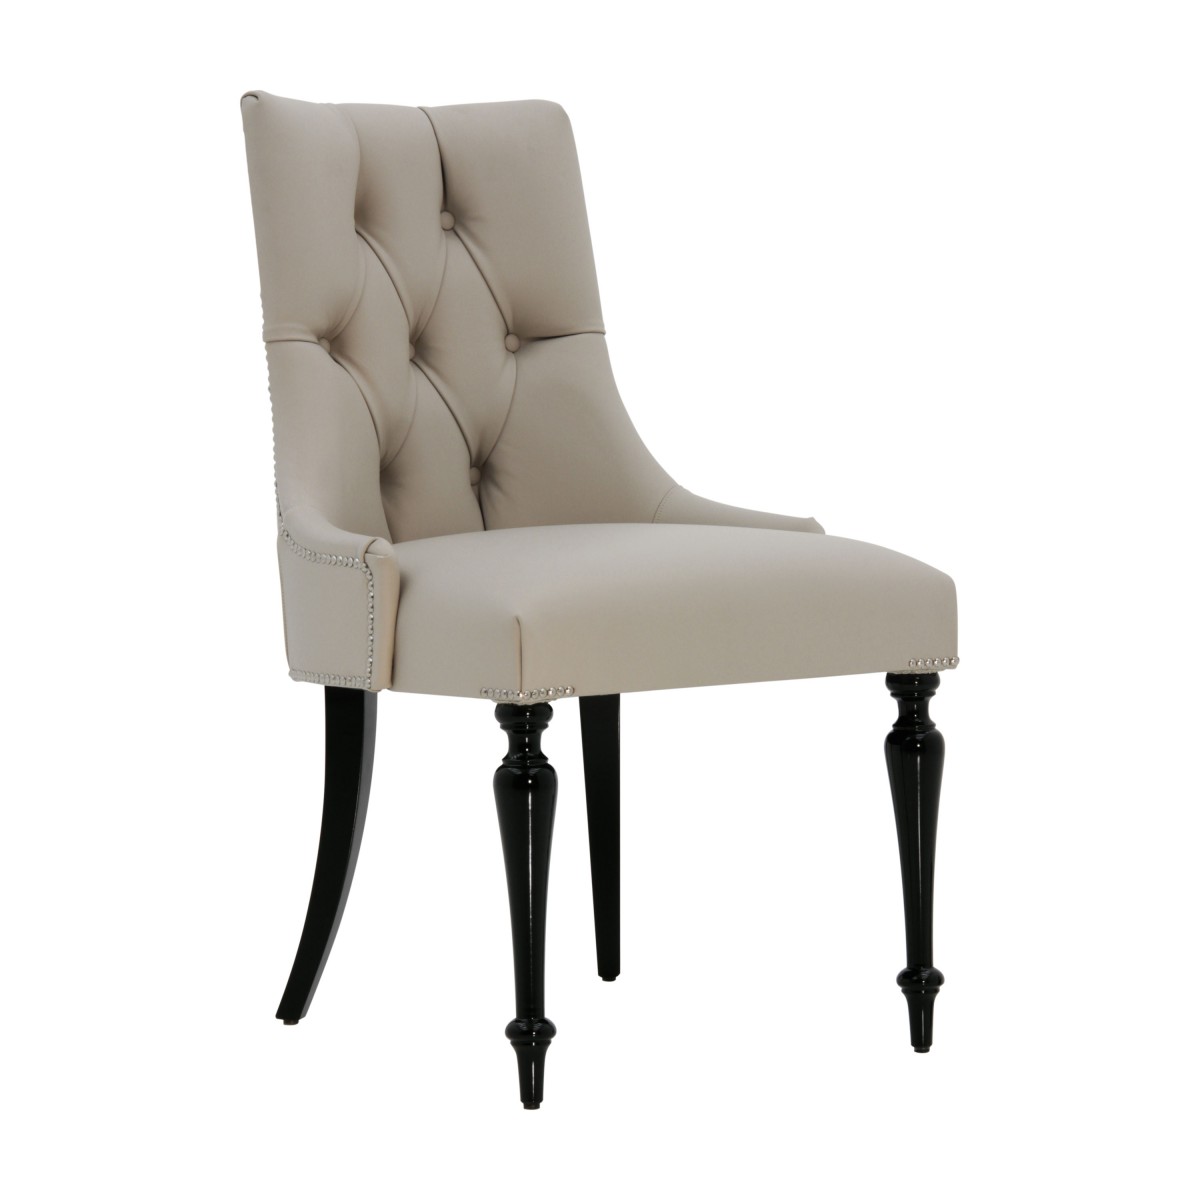 italian classic chair ramses 3469